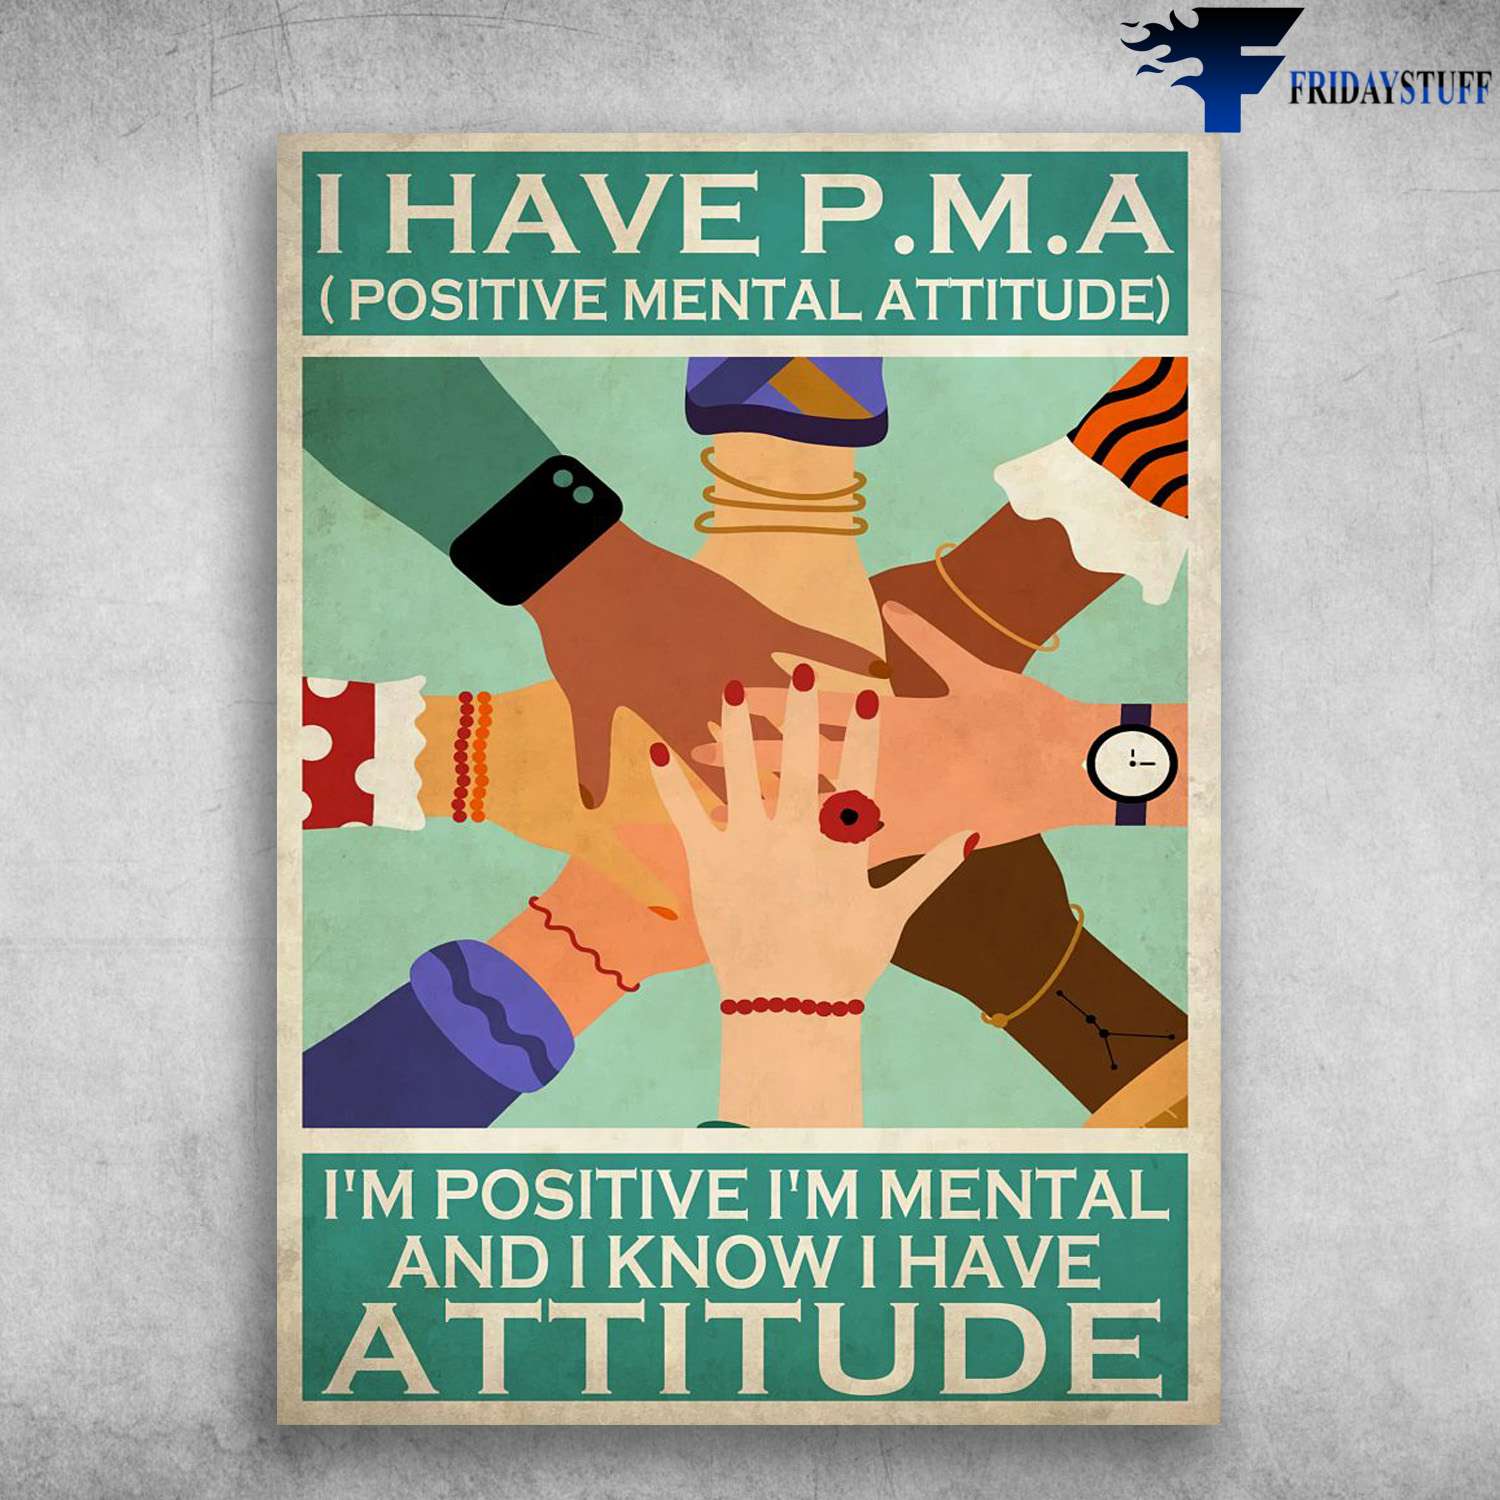 Social Worker - I Have P.M.A, Positive Mental Attitude, I'm Positive, I'm Mental, And I Know I Have Attitude